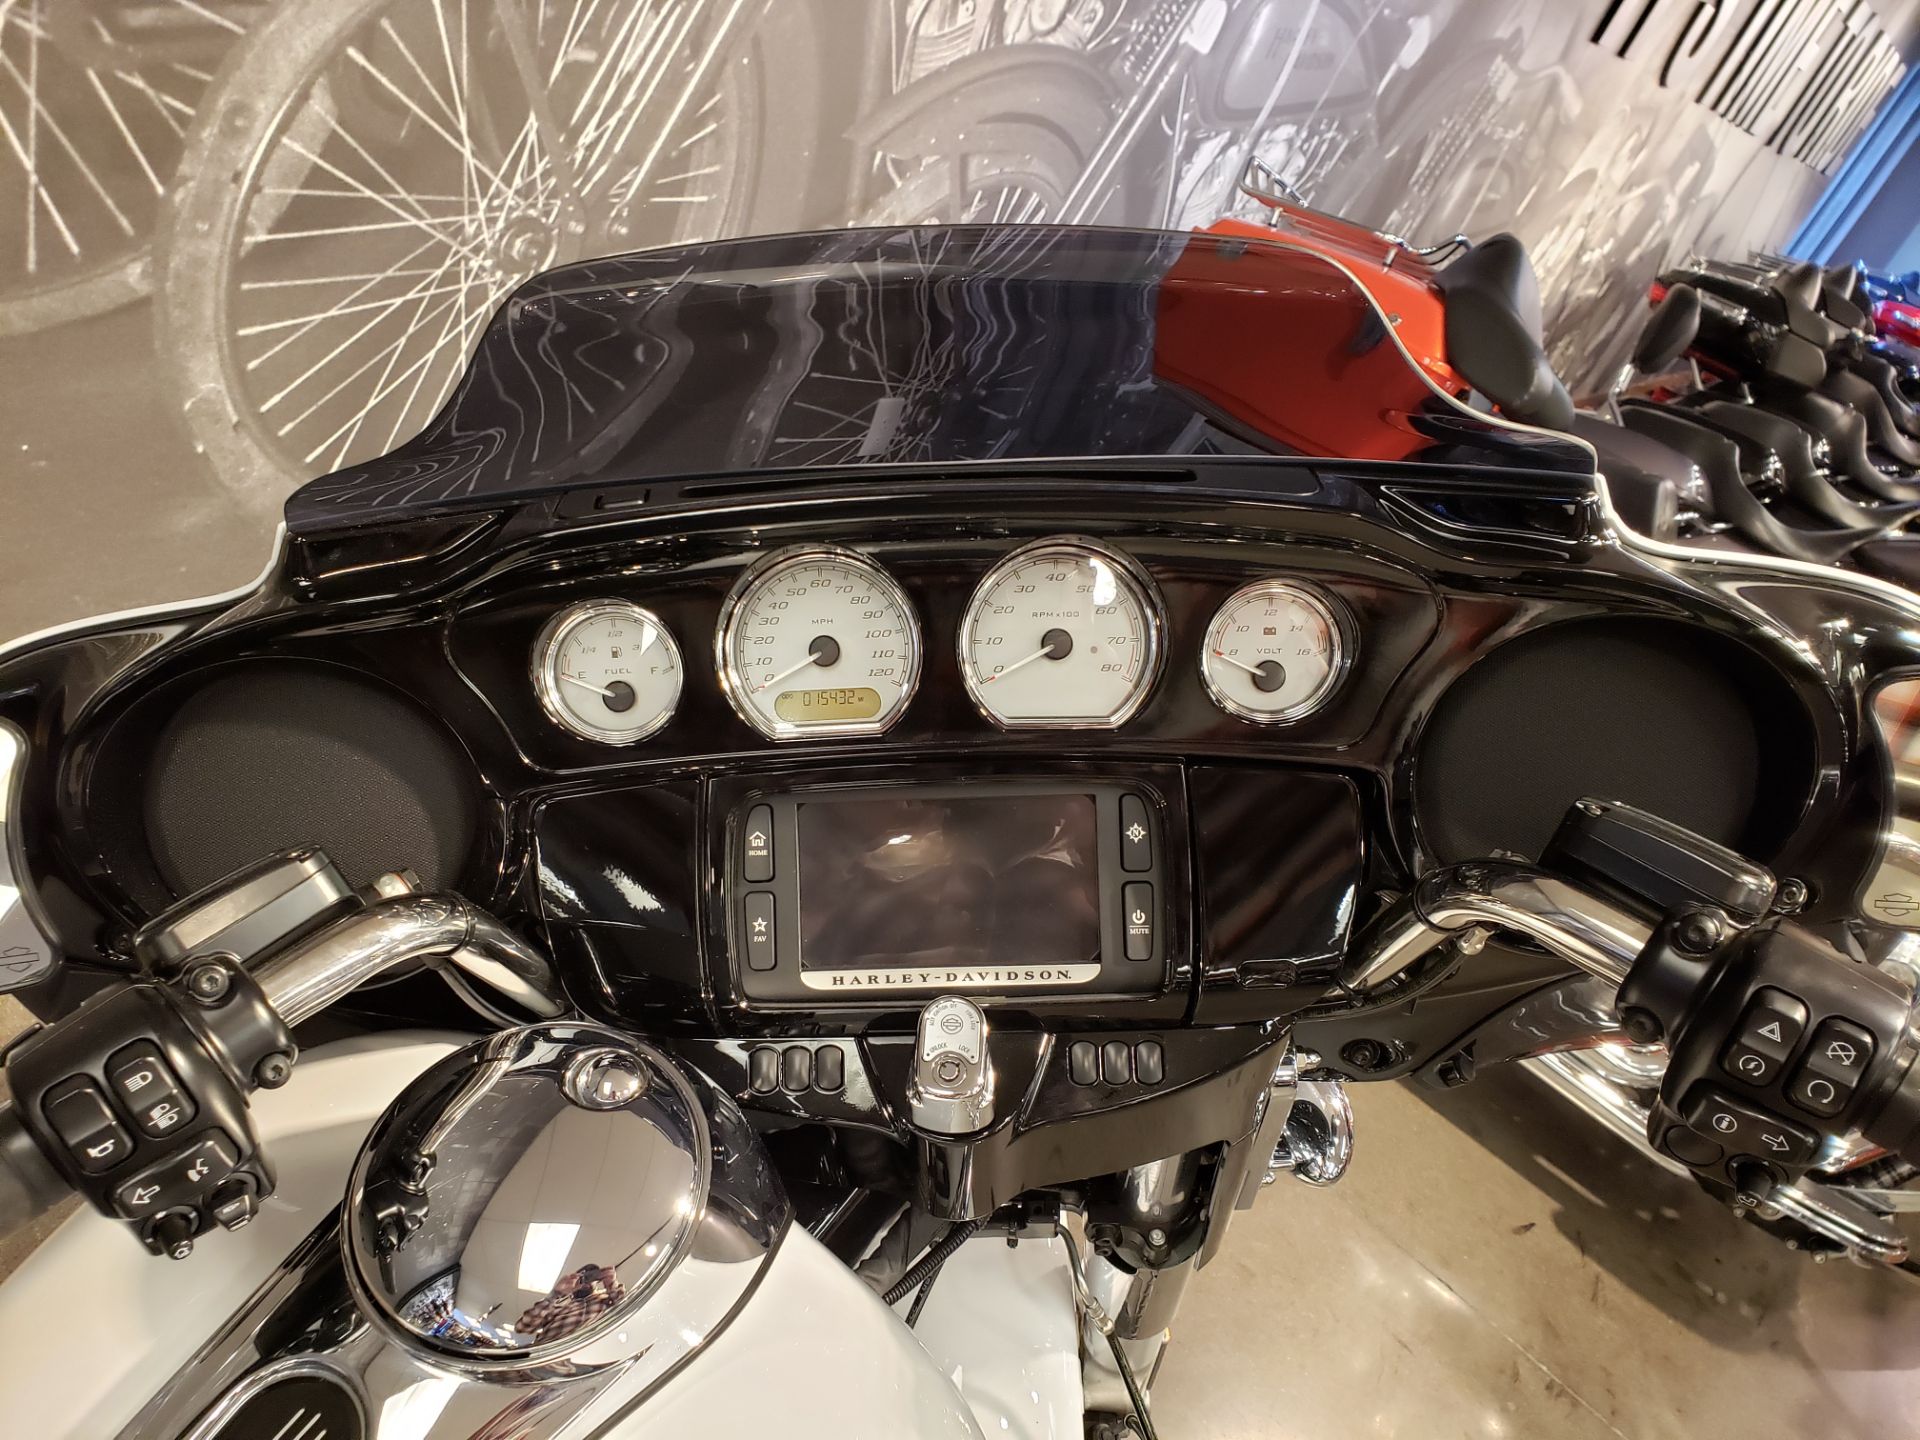 Motrocycle Mount Plate Gauge Bezel Trims For Harley Street Glide Touring 2014-UP